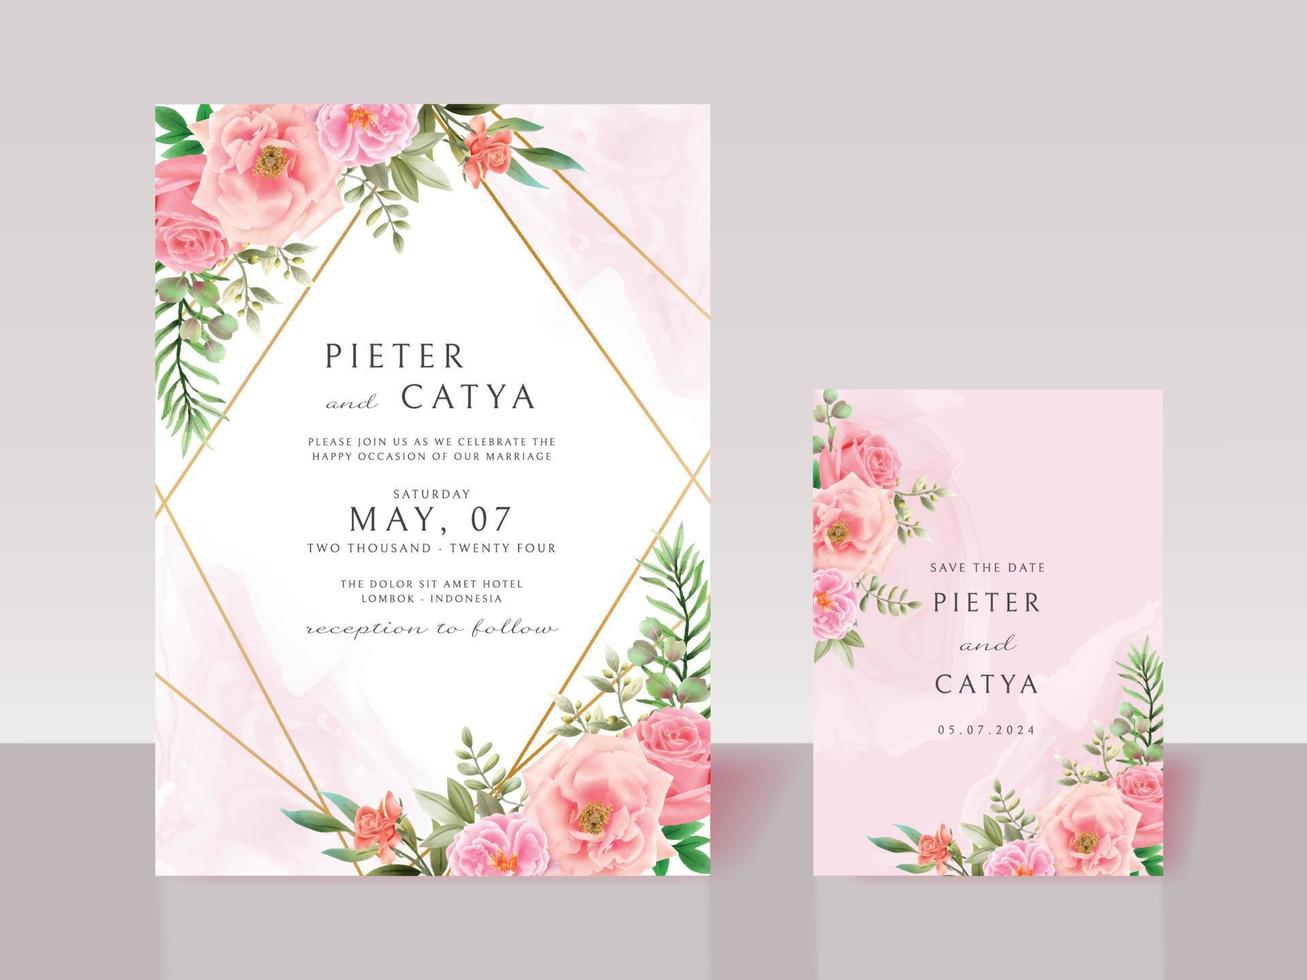 Beautiful pink floral watercolor wedding invitation cards vector